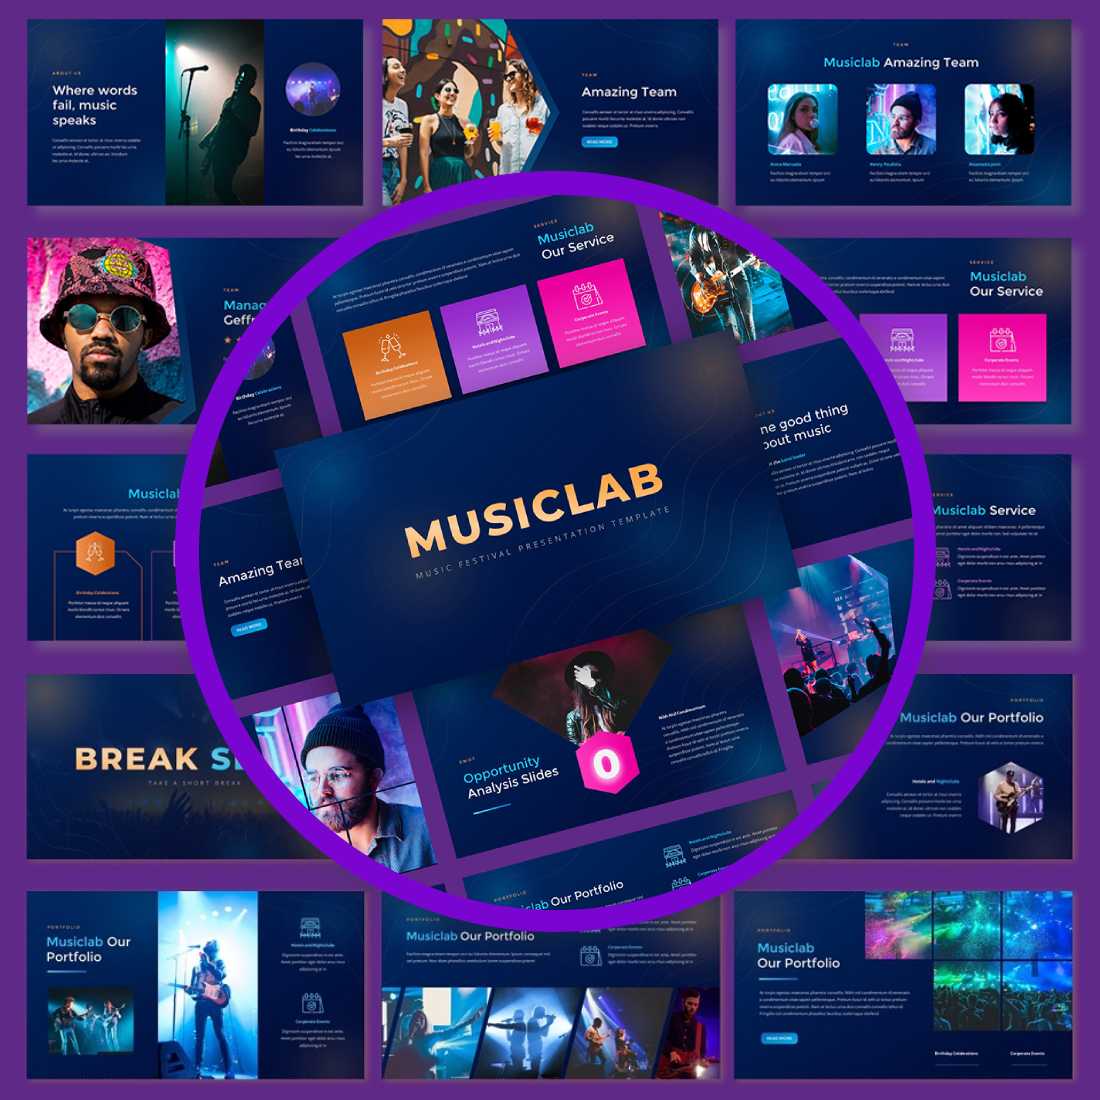 Musiclab - Music Festival Keynote Presentation Template cover image.